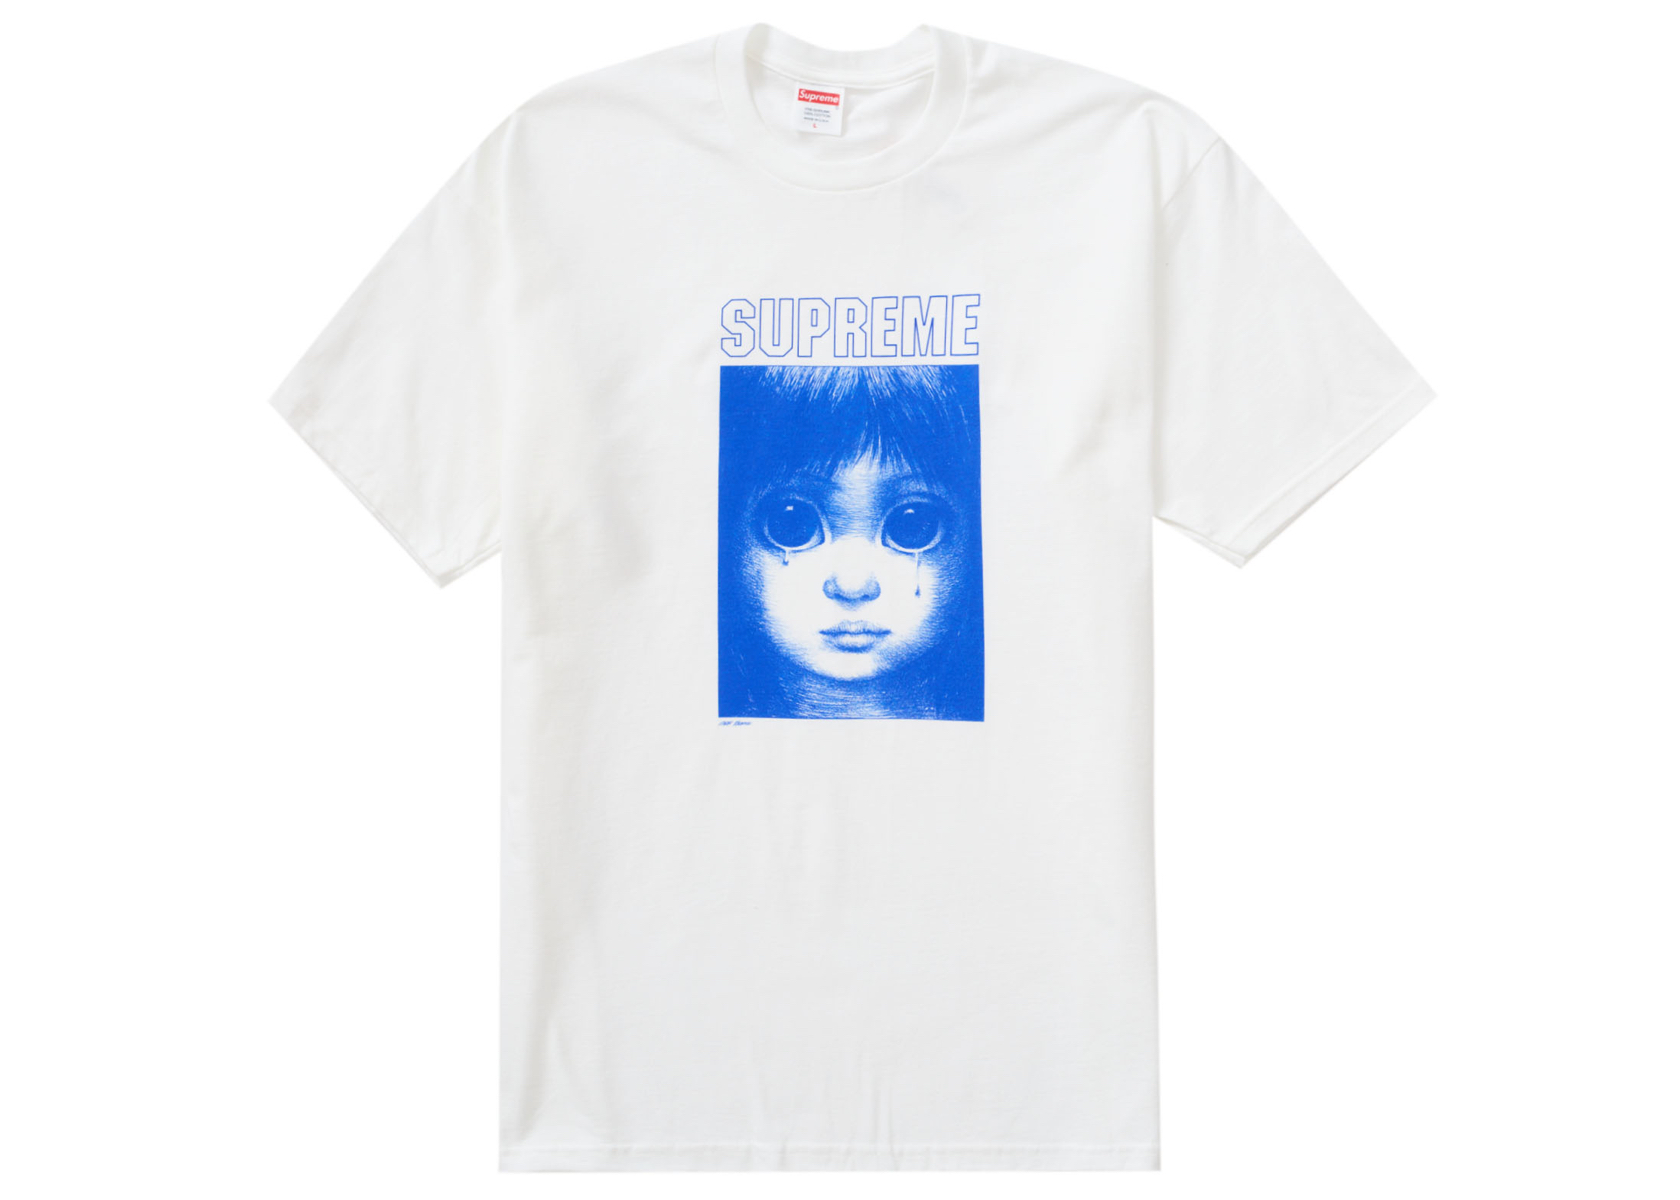 $HoodedSweatshiSupreme Margaret Keane Teardrop Shirt